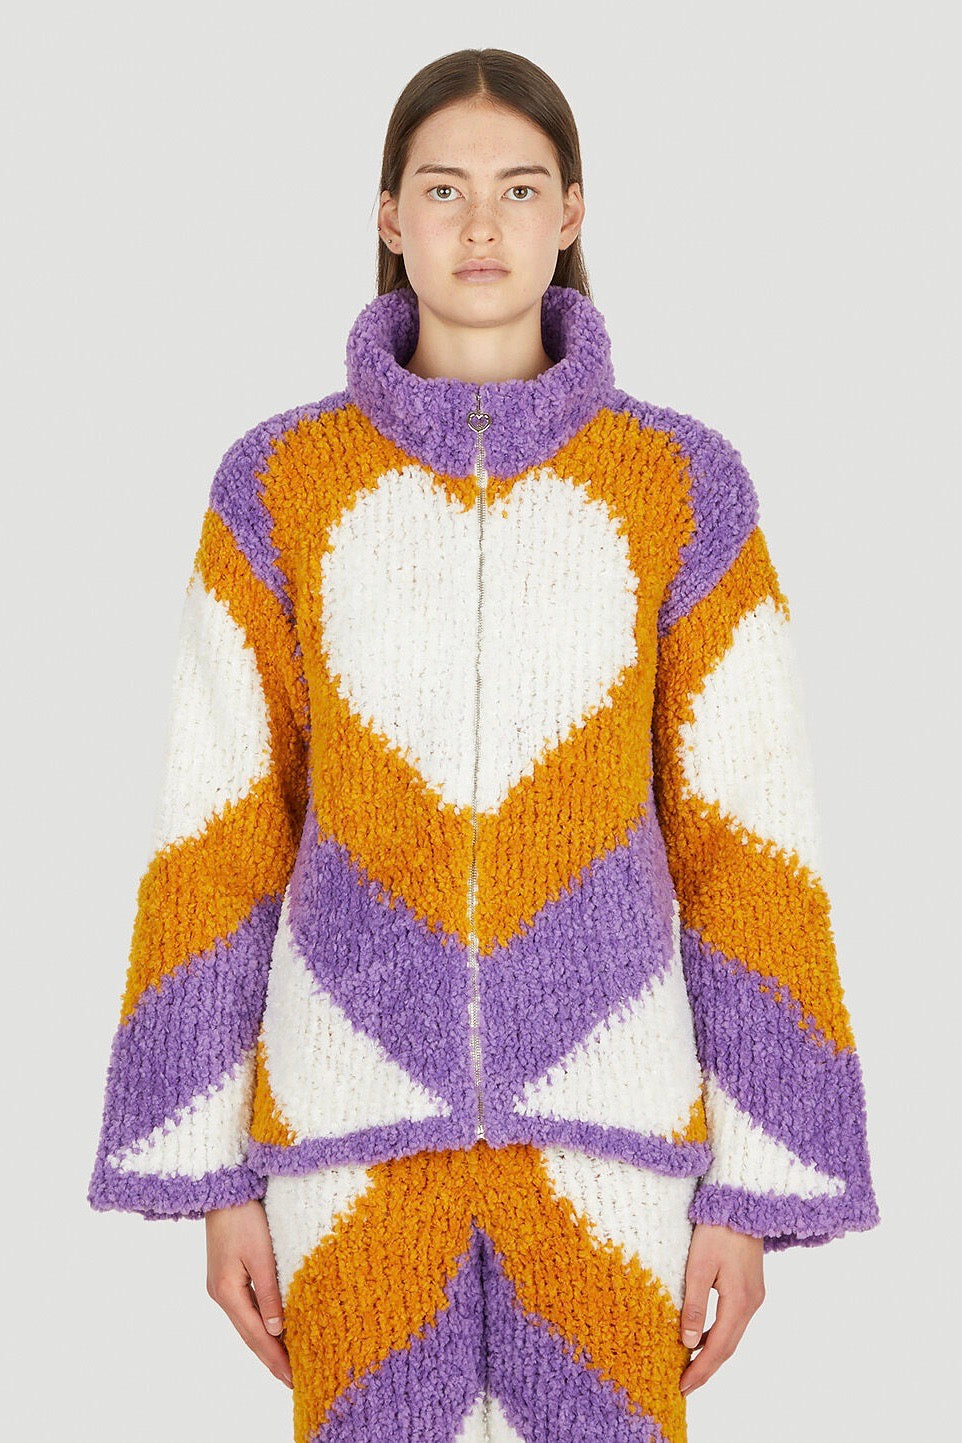 Marco Rambaldi - Hearts Pile Knitted Sweatshirt: Purple & Mustard